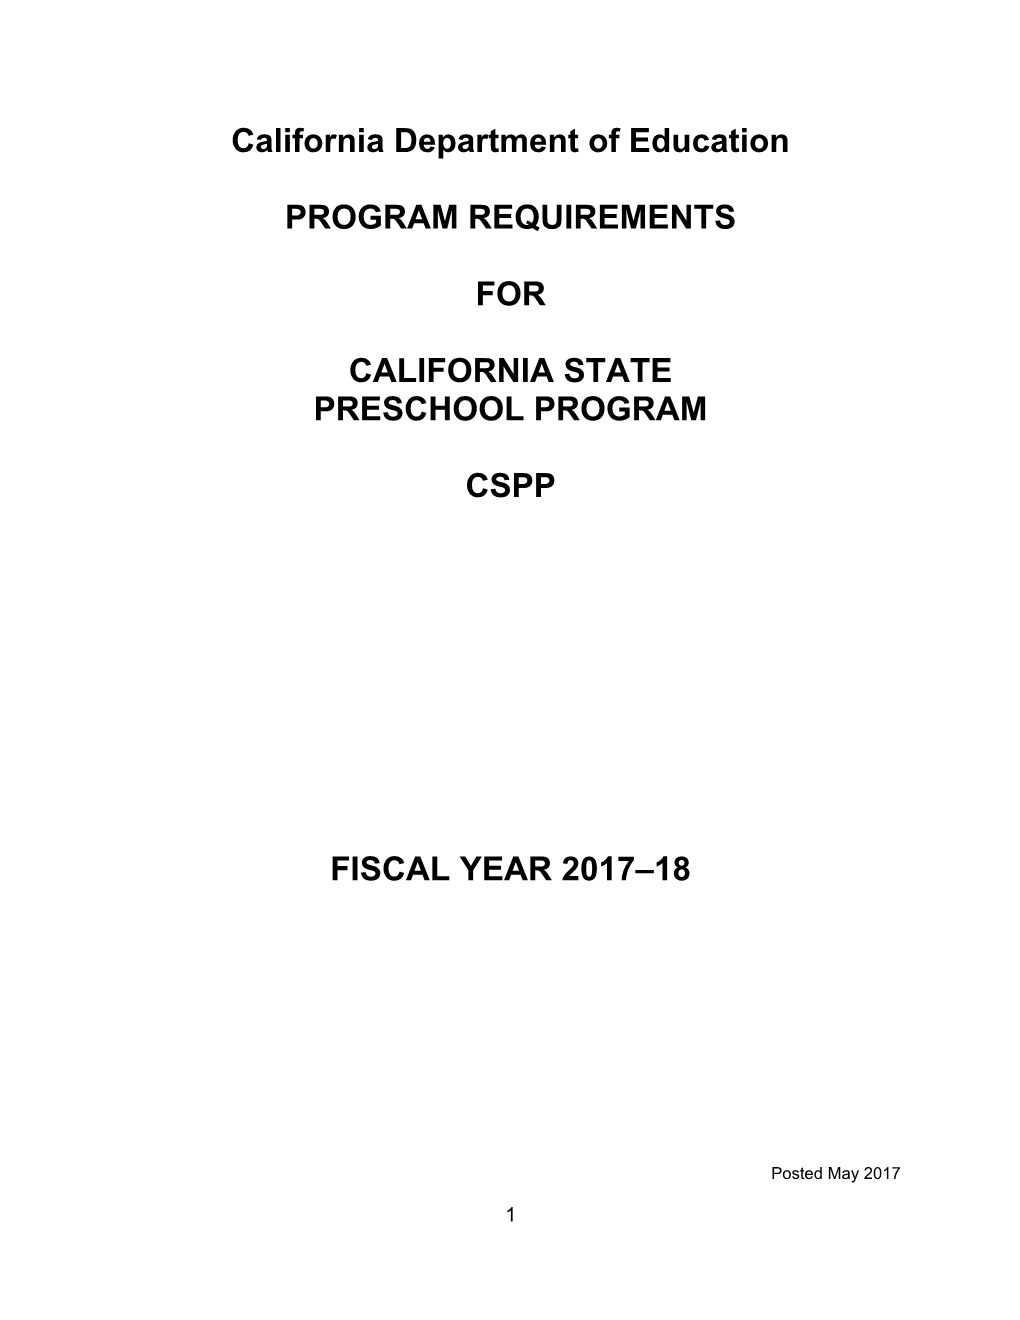 2017-18 CSPPP Prek and Family Literacy Full-Day - Child Development (CA Dept of Education)